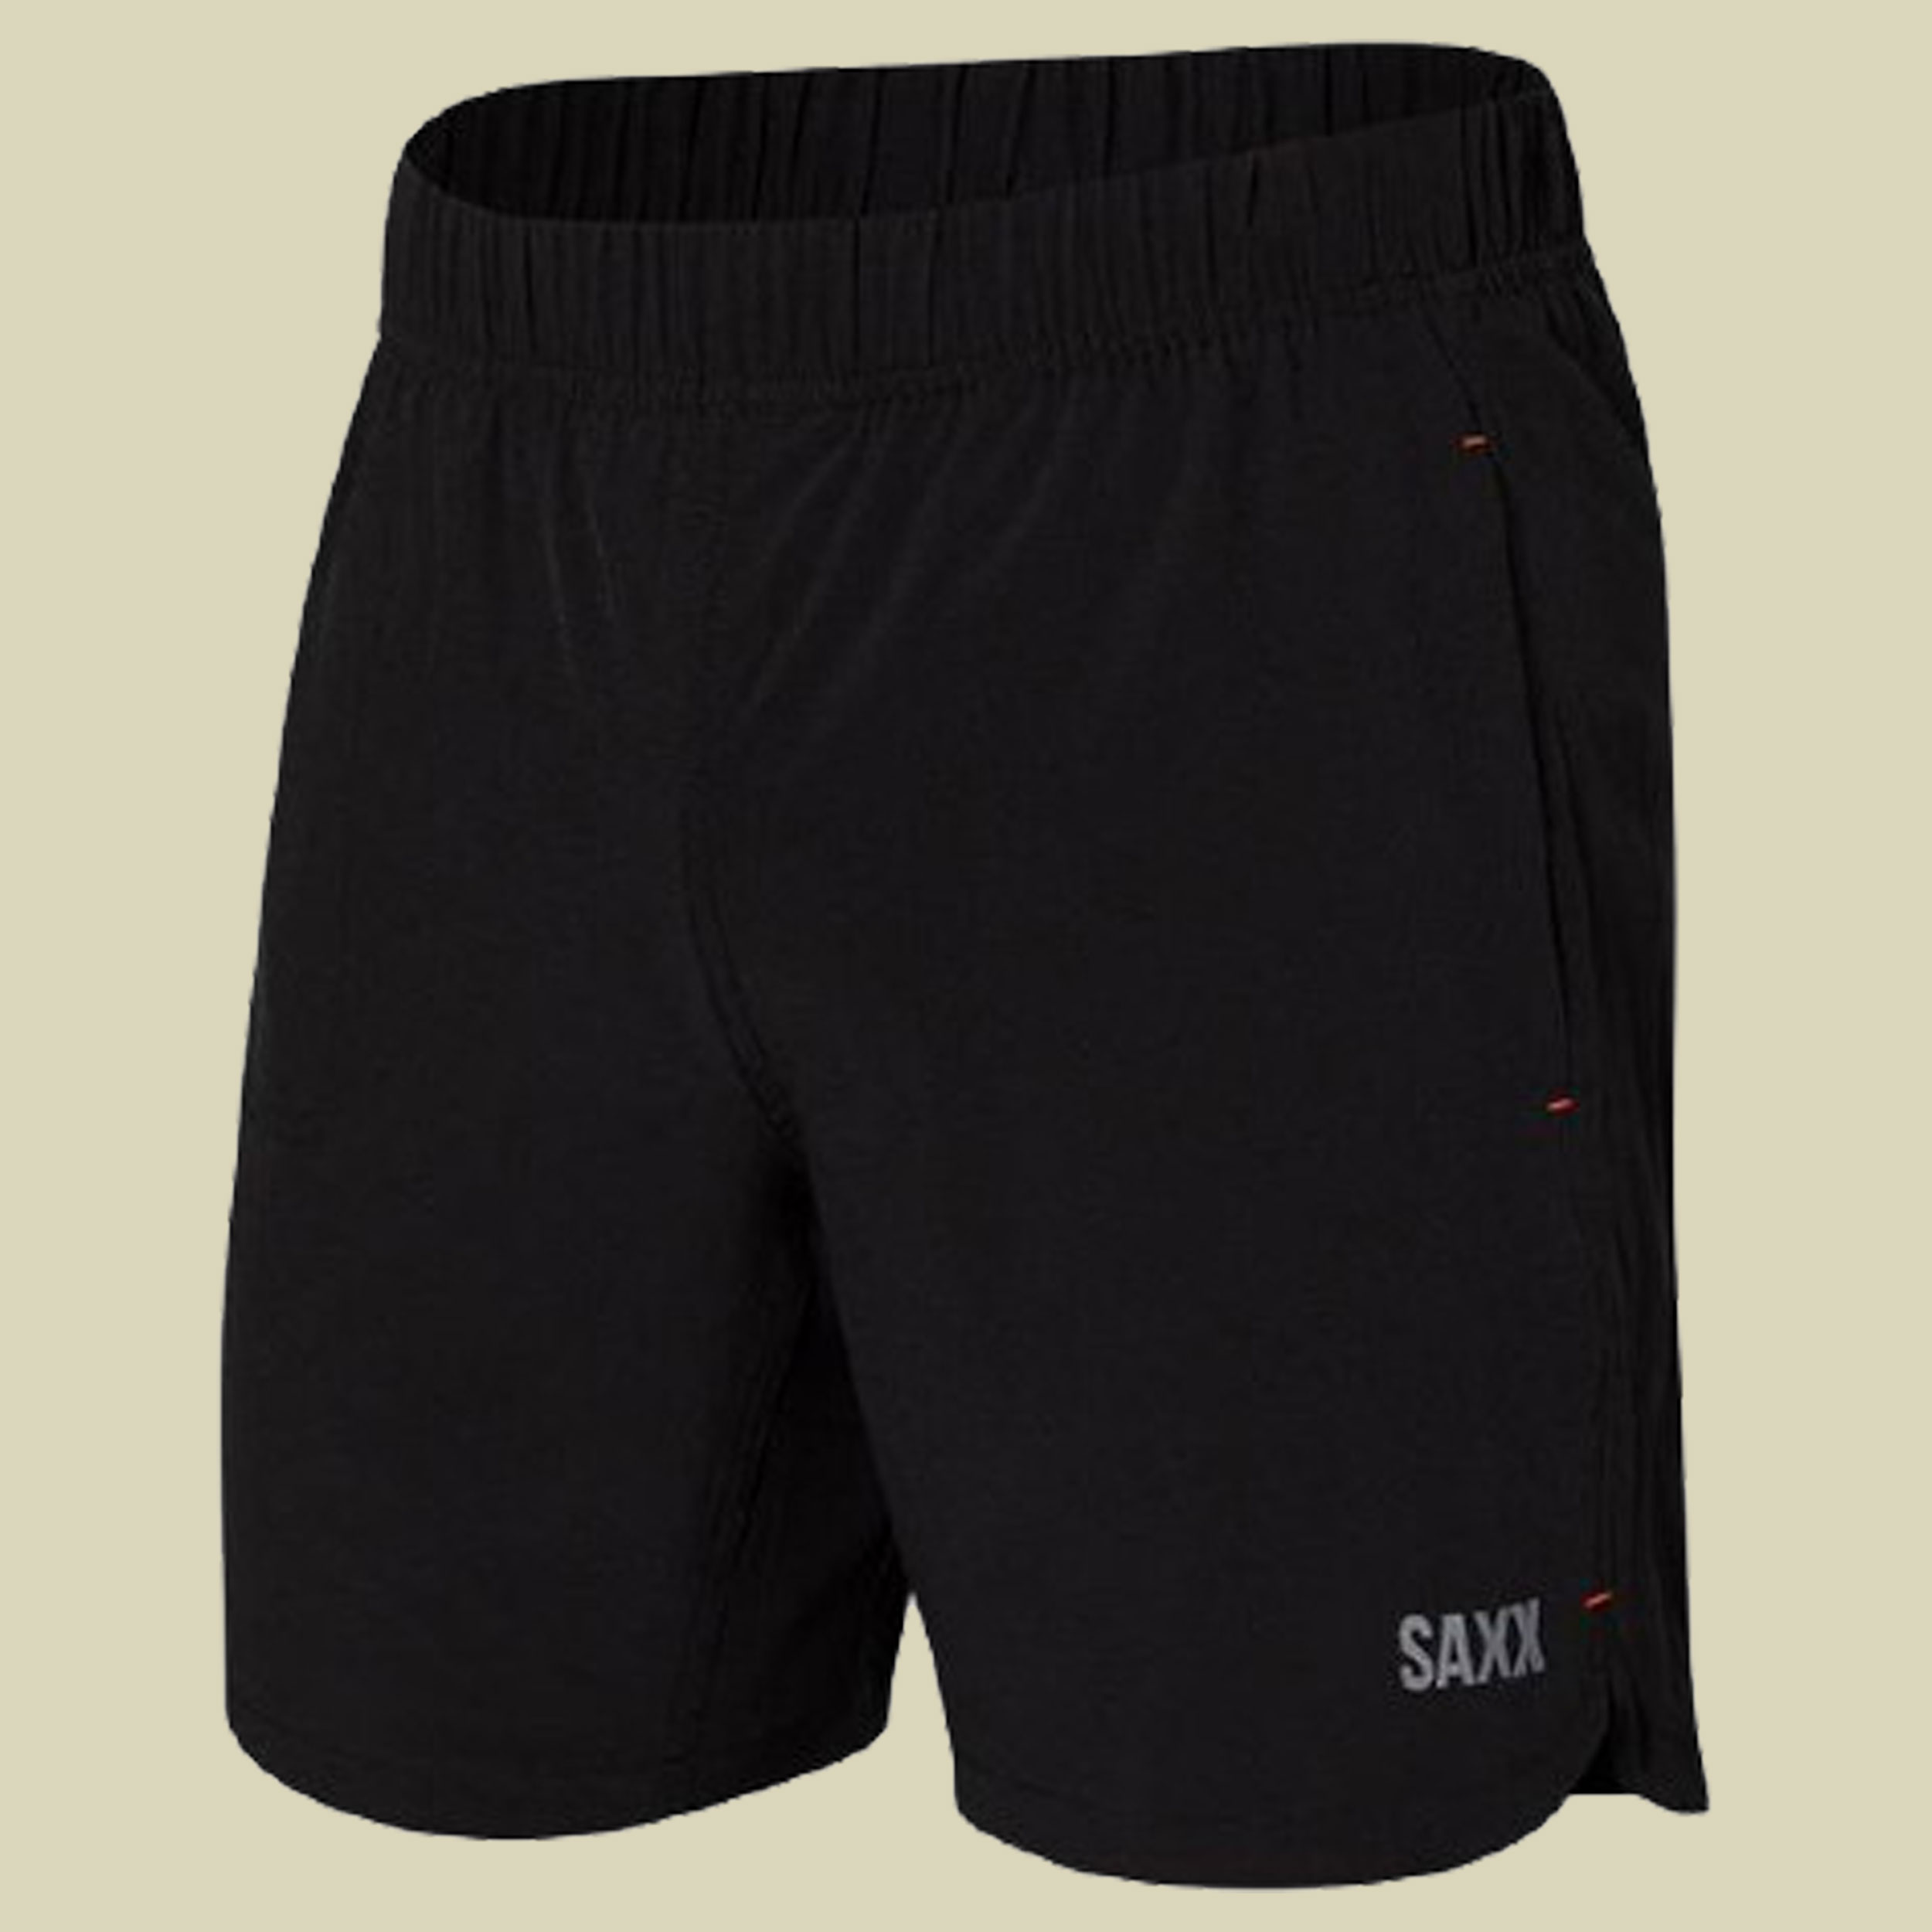 Gainmaker 2N1 Shorts 7“ Größe S Farbe black